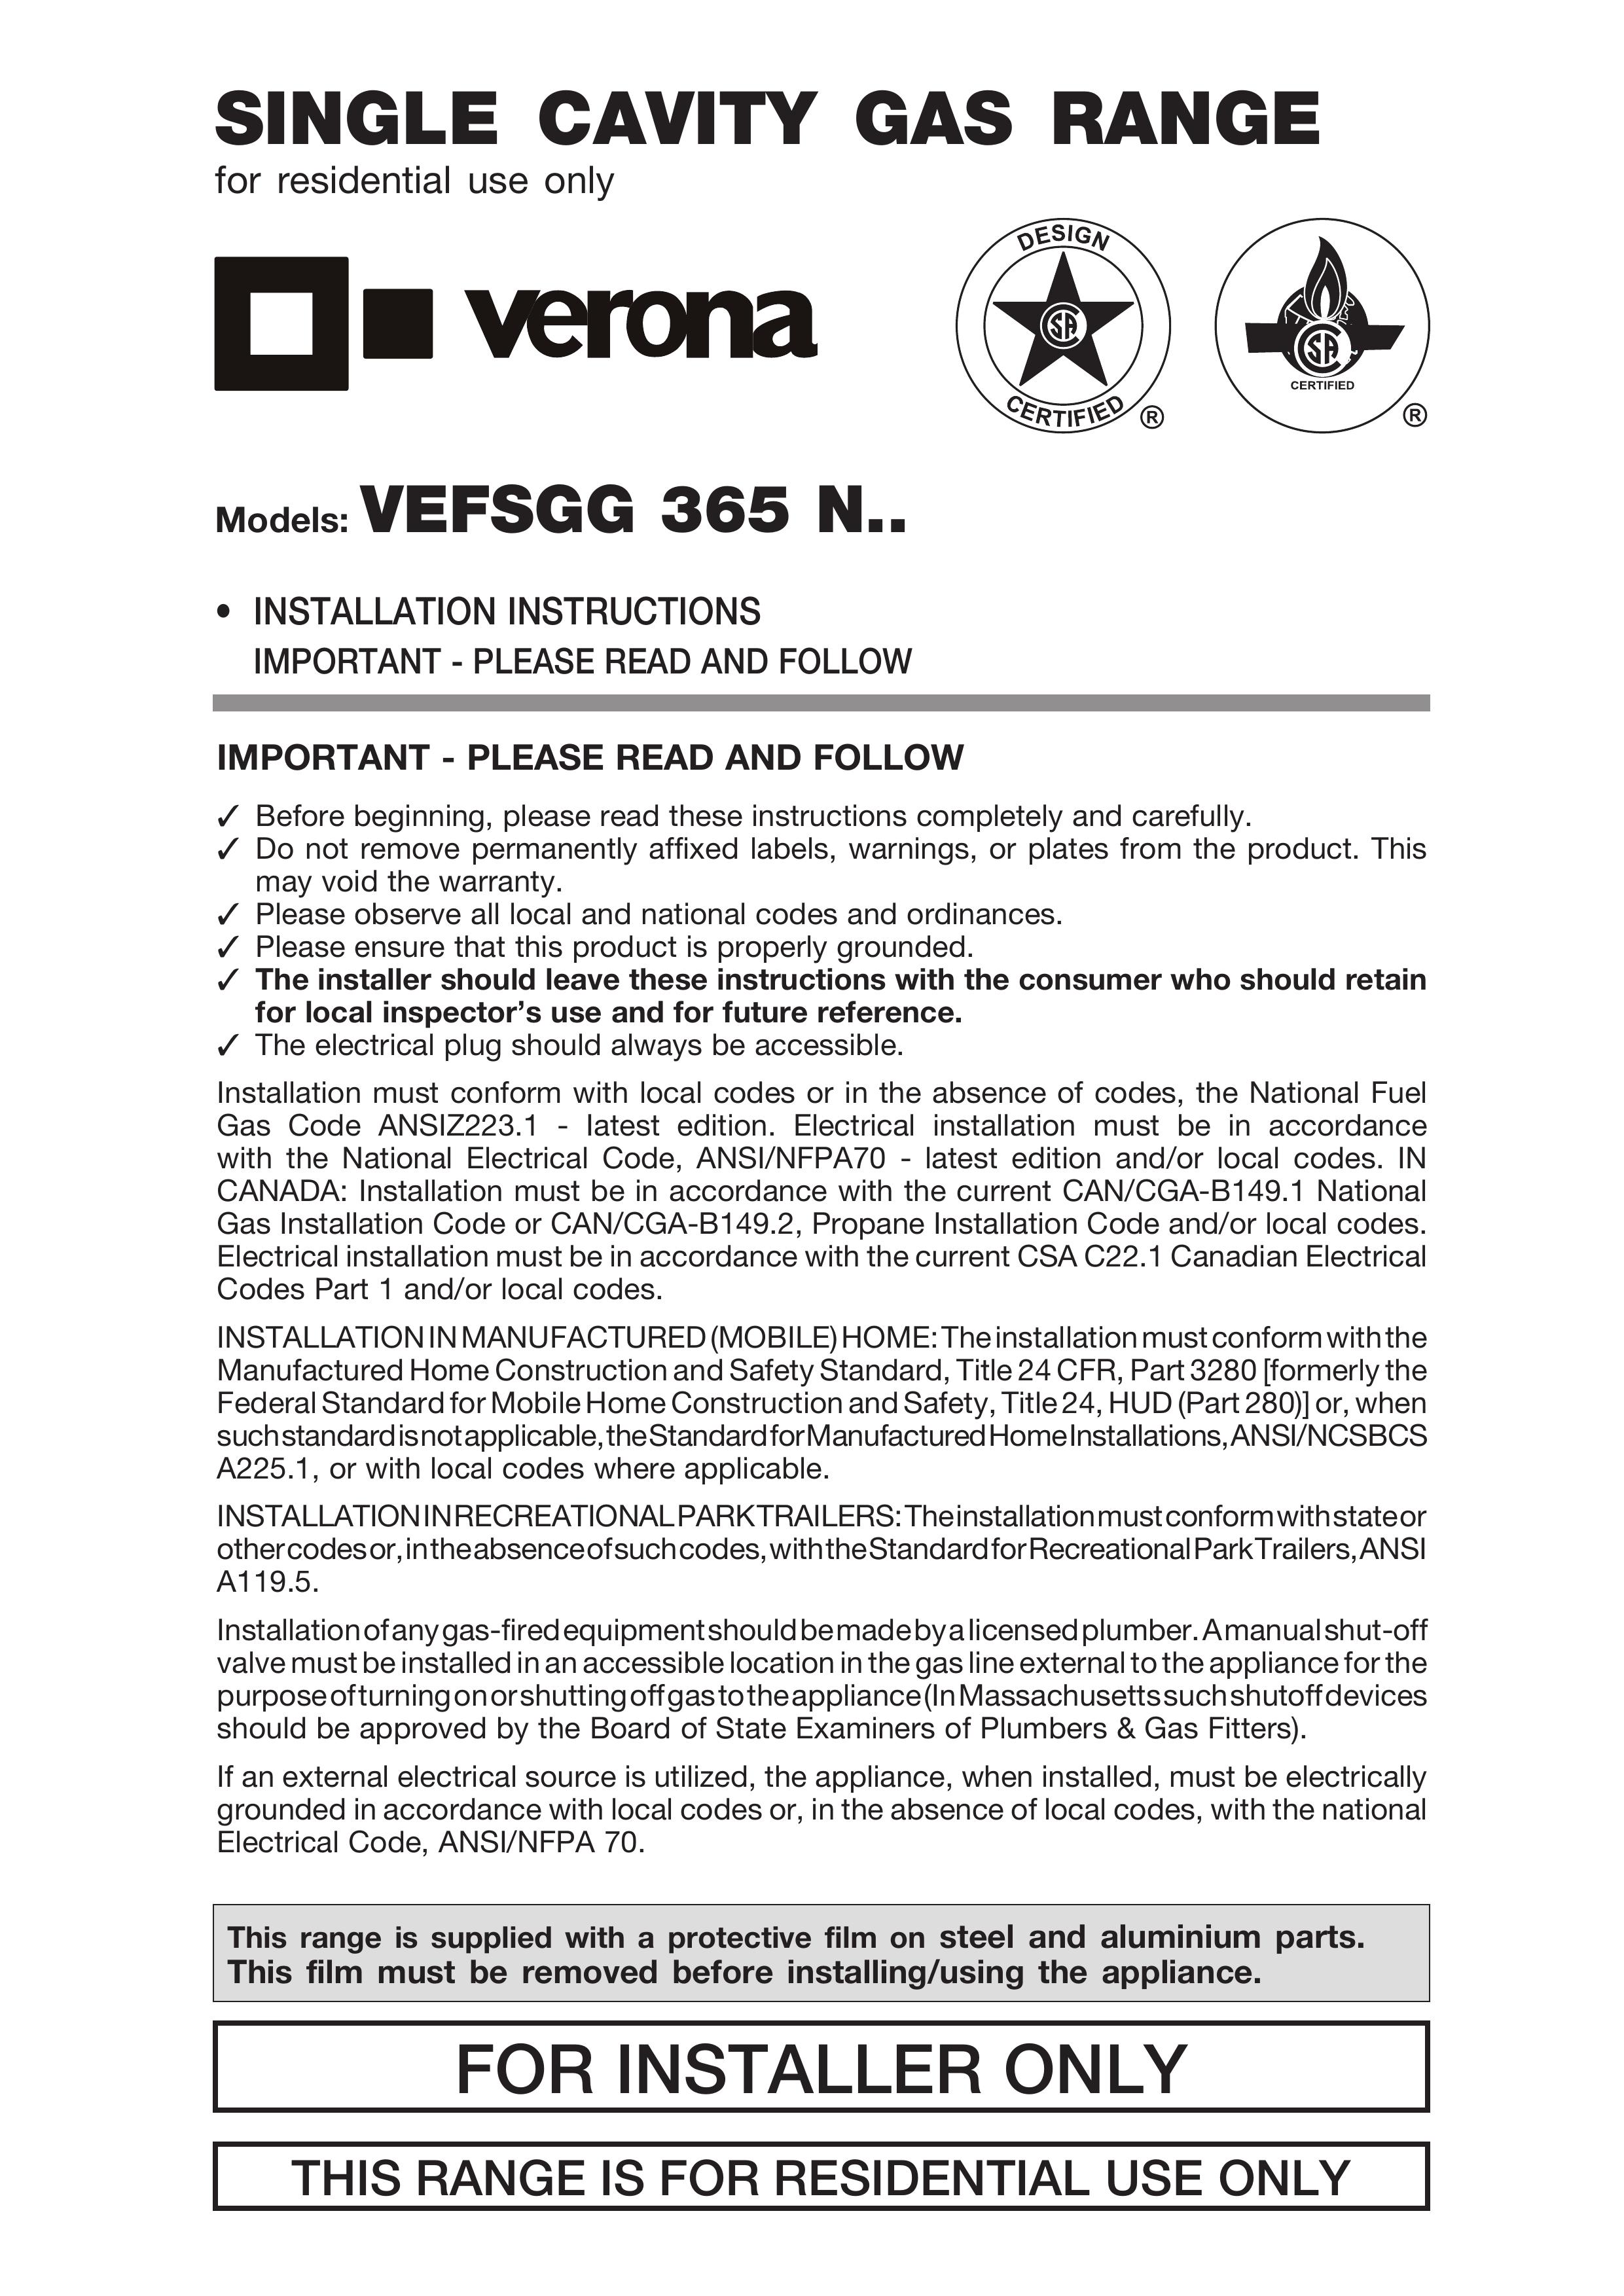 Verona VEFSGG 365 N Range User Manual